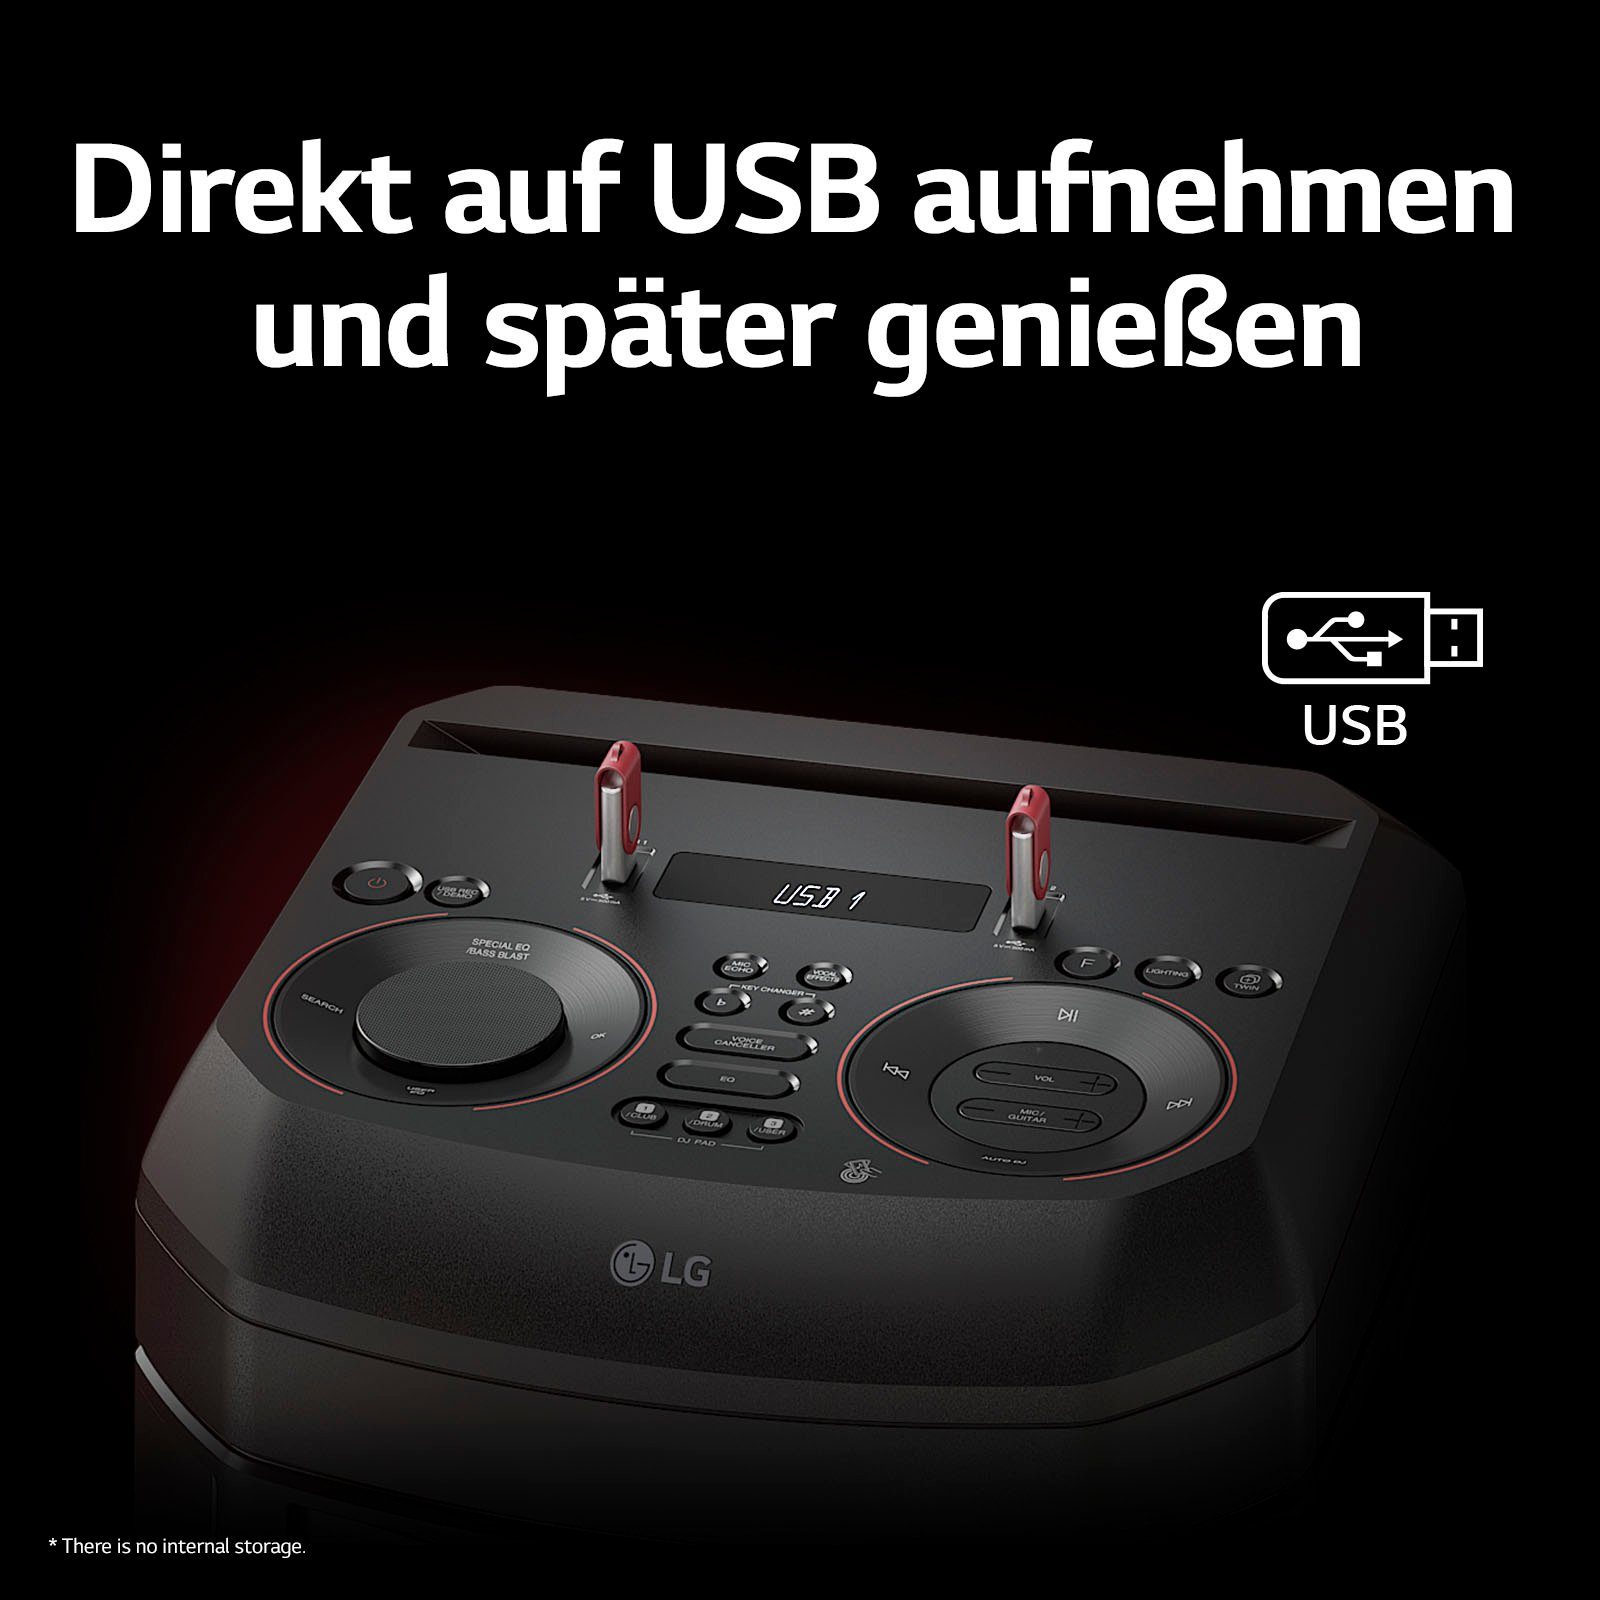 (Bluetooth) XBOOM Stereo RNC7 LG Party-Lautsprecher